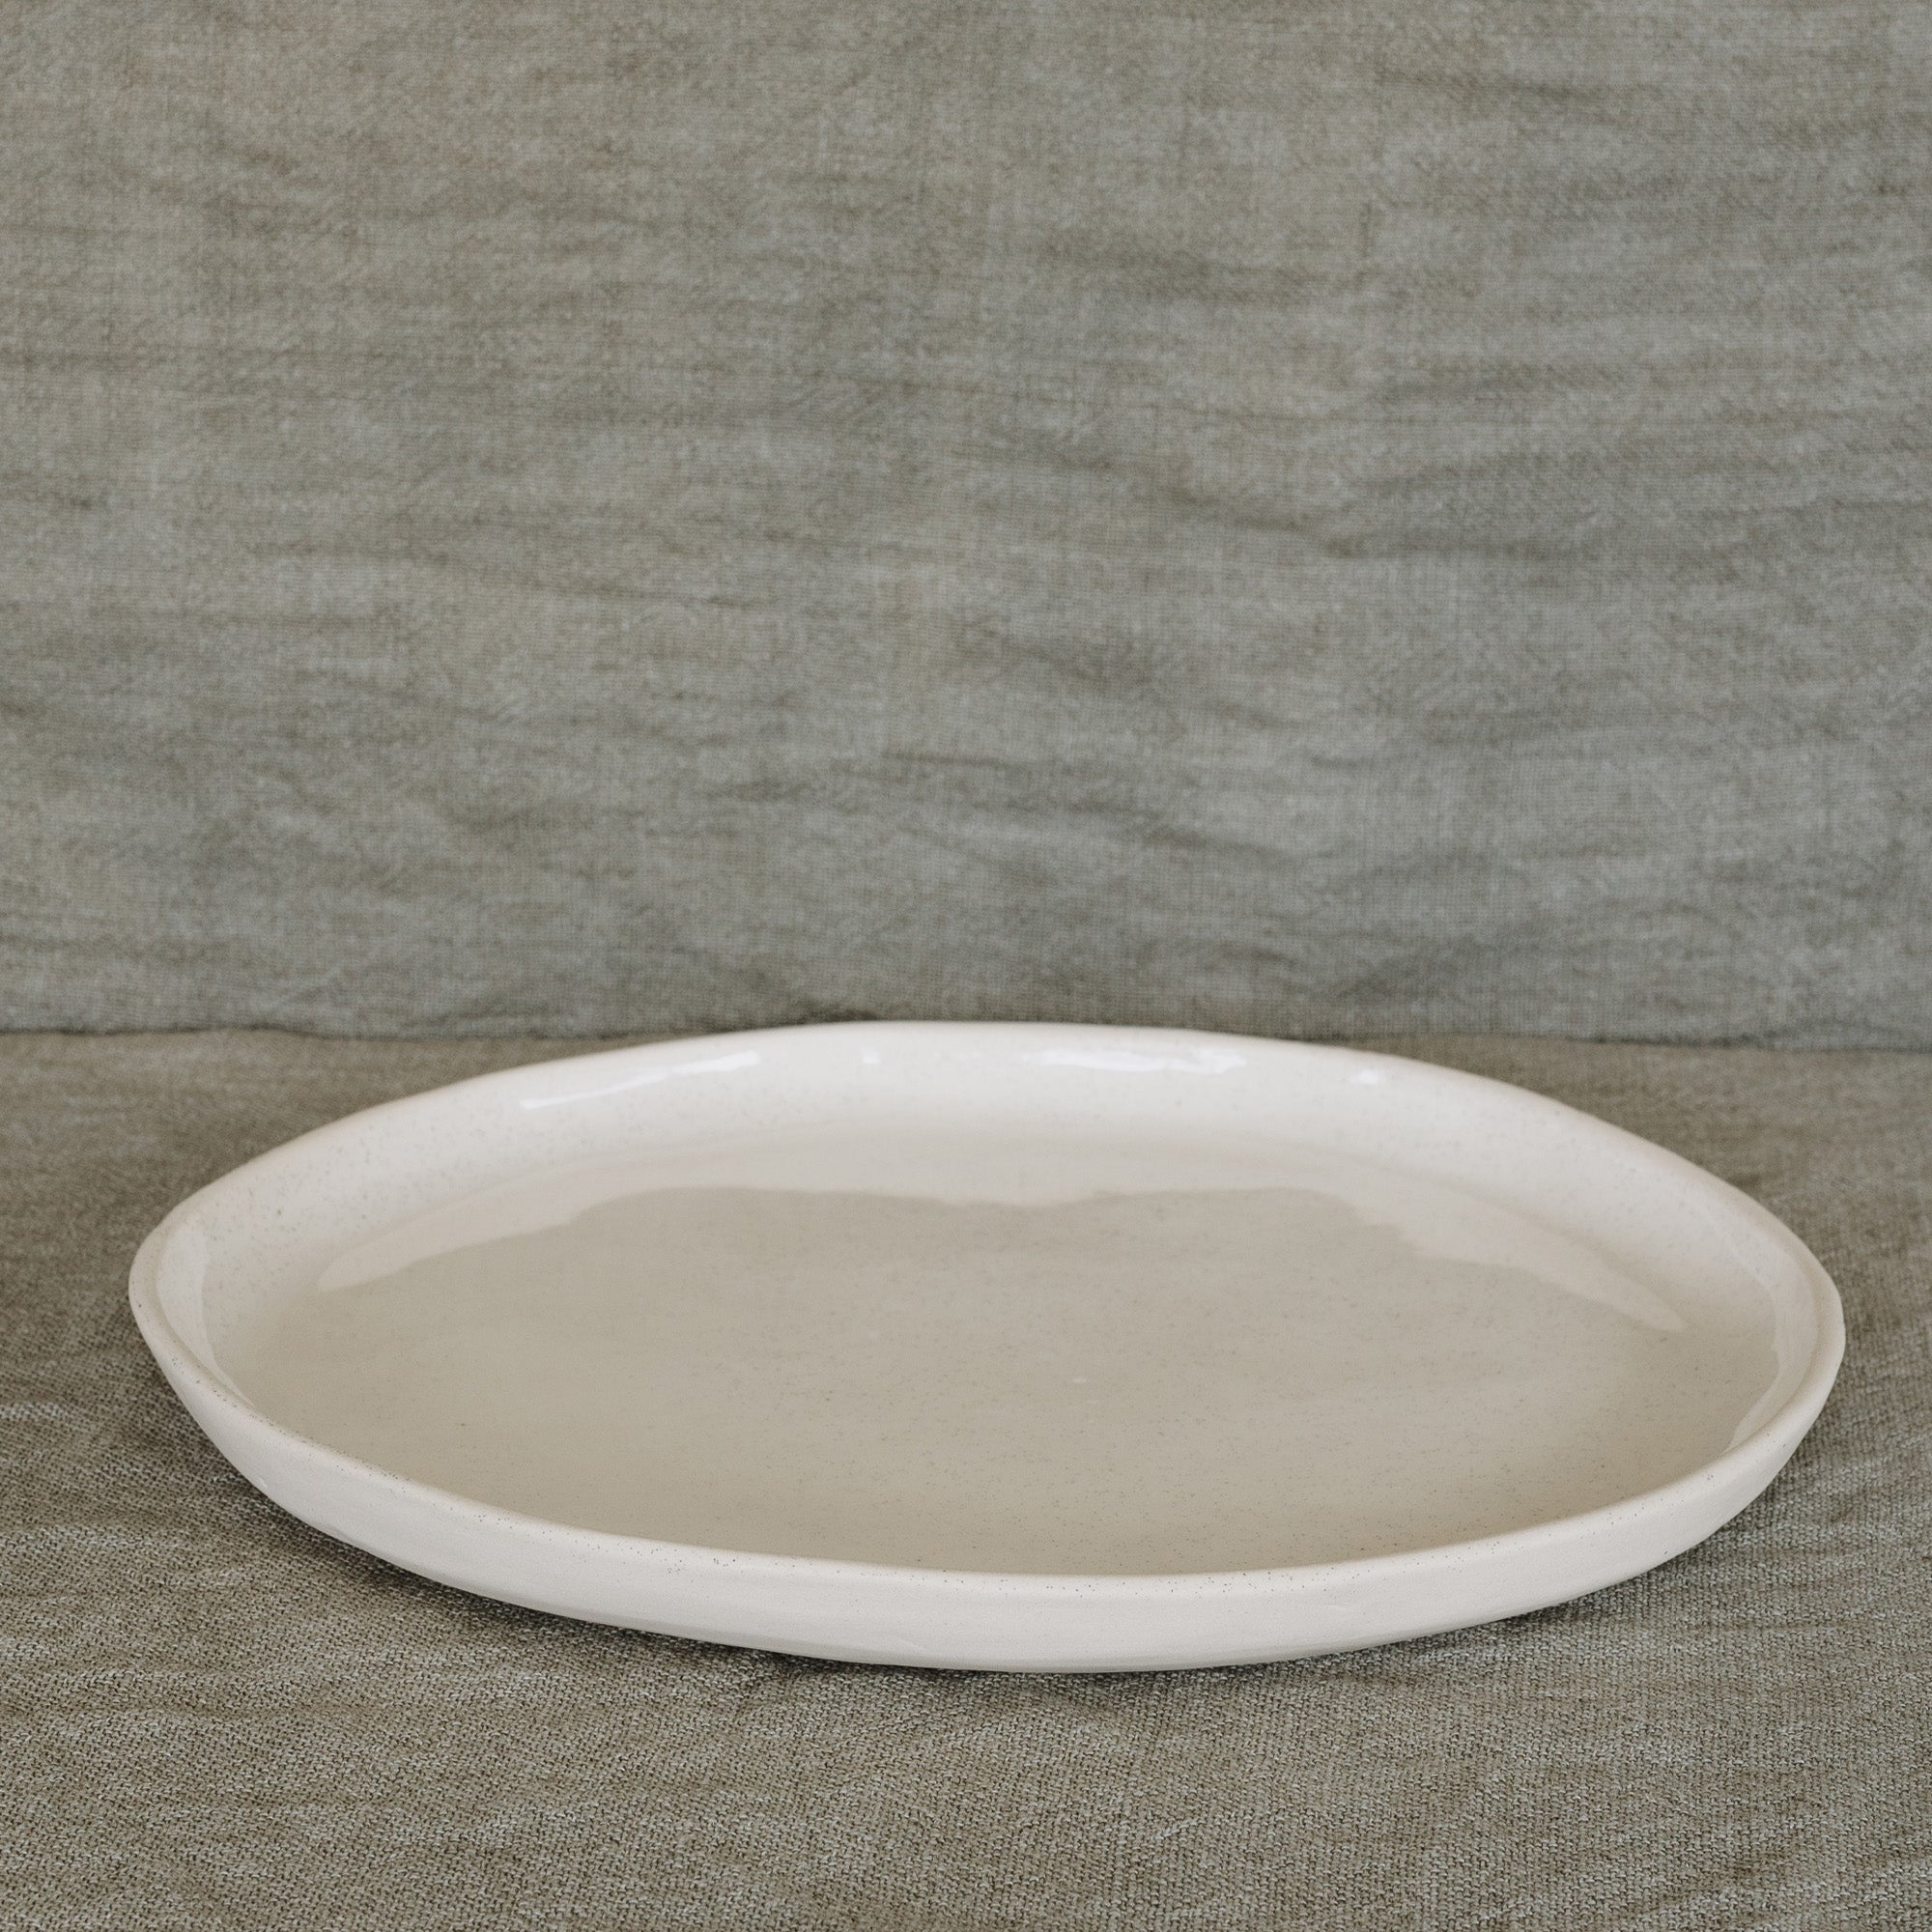 Round Platter, Oatmeal